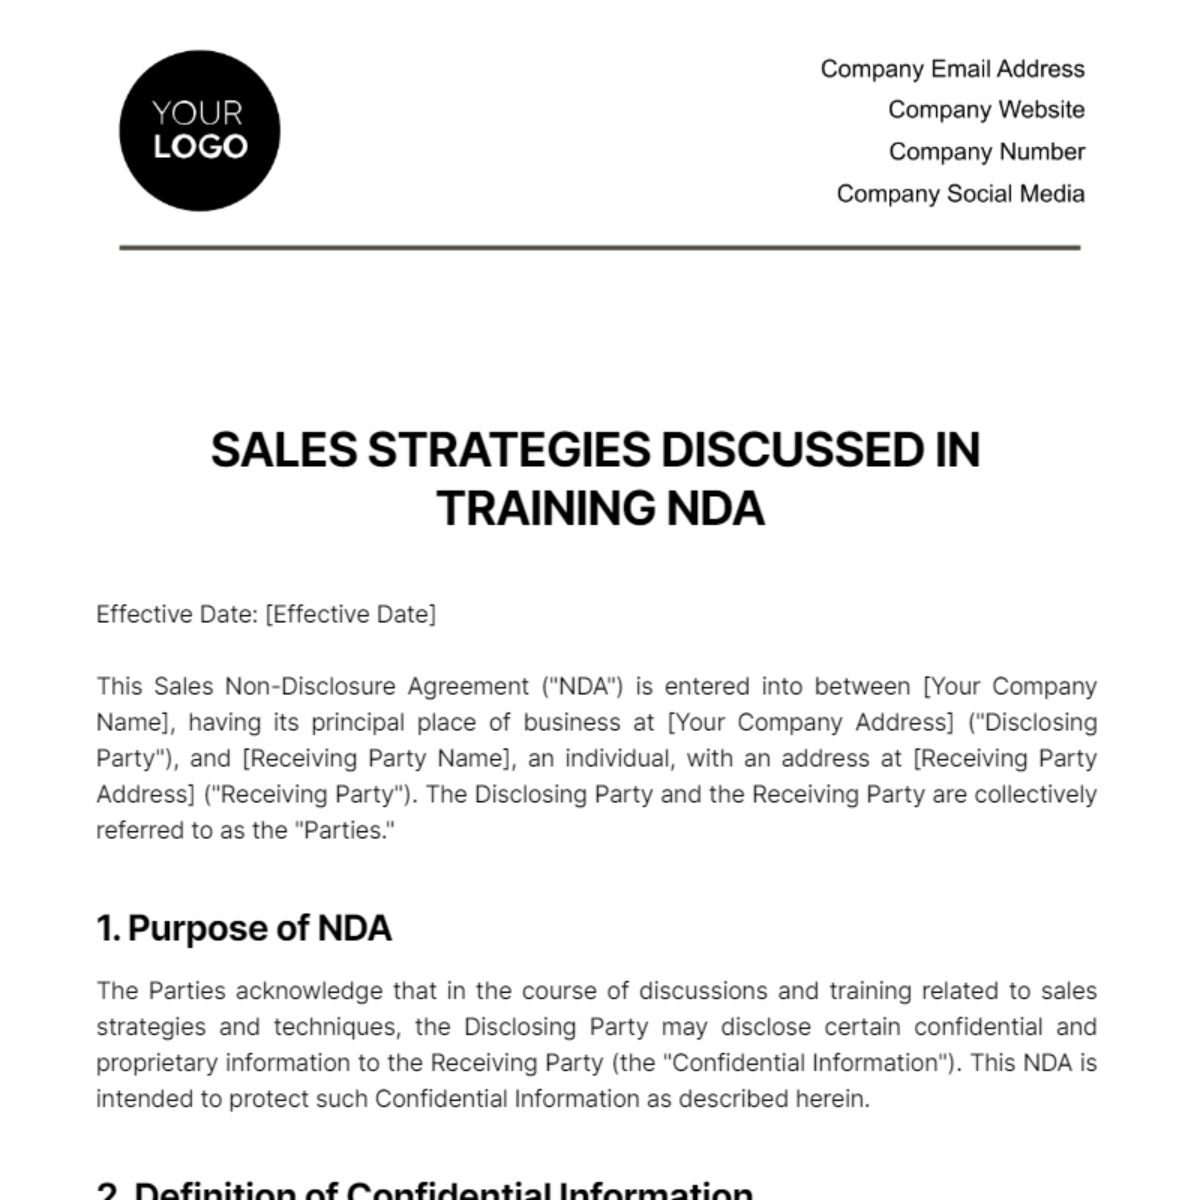 Free Sales Strategies Discussed in Training NDA Template